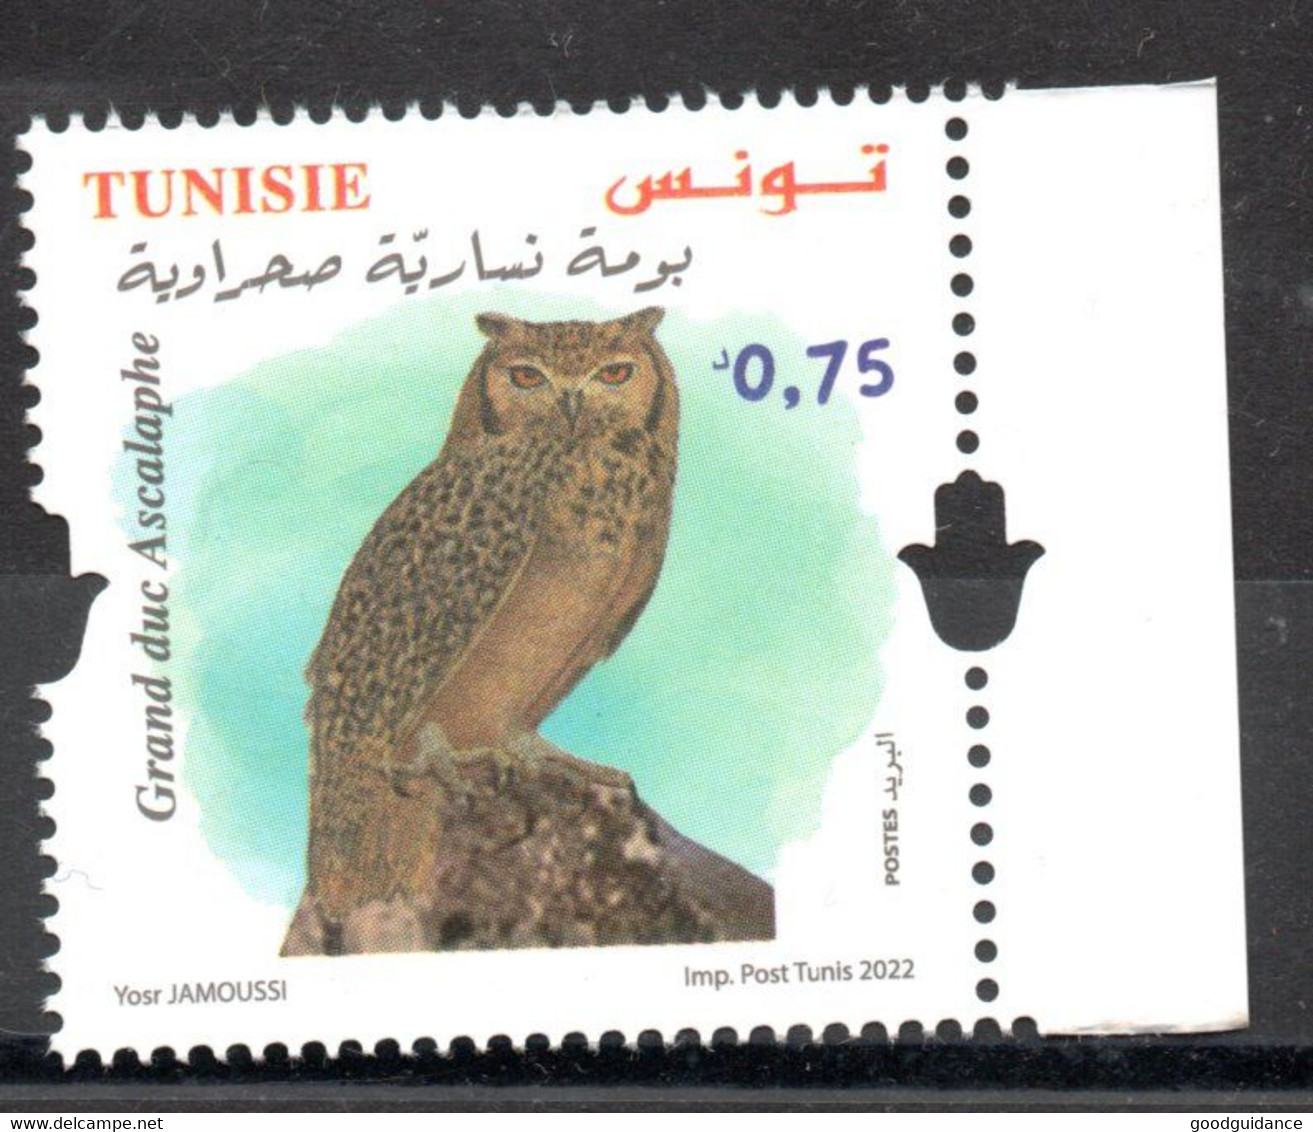 2022 - Tunisie - Oiseaux De Tunisie - Rapaces -  Grand Duc Ascalaphe -  Hibou- 1v.MNH** - Tunisia